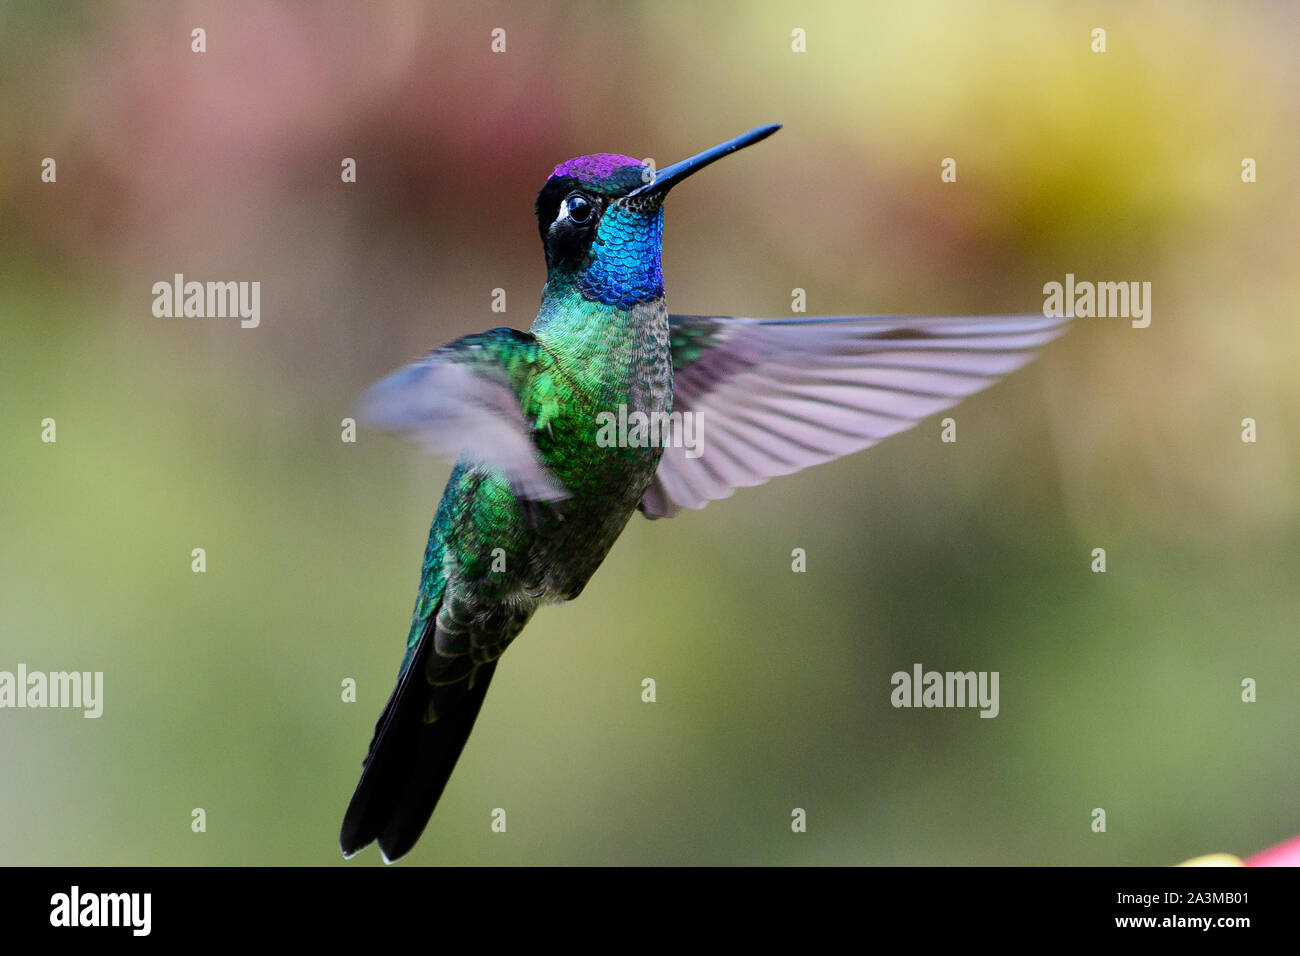 Magnífico colibrí en vuelo Foto de stock